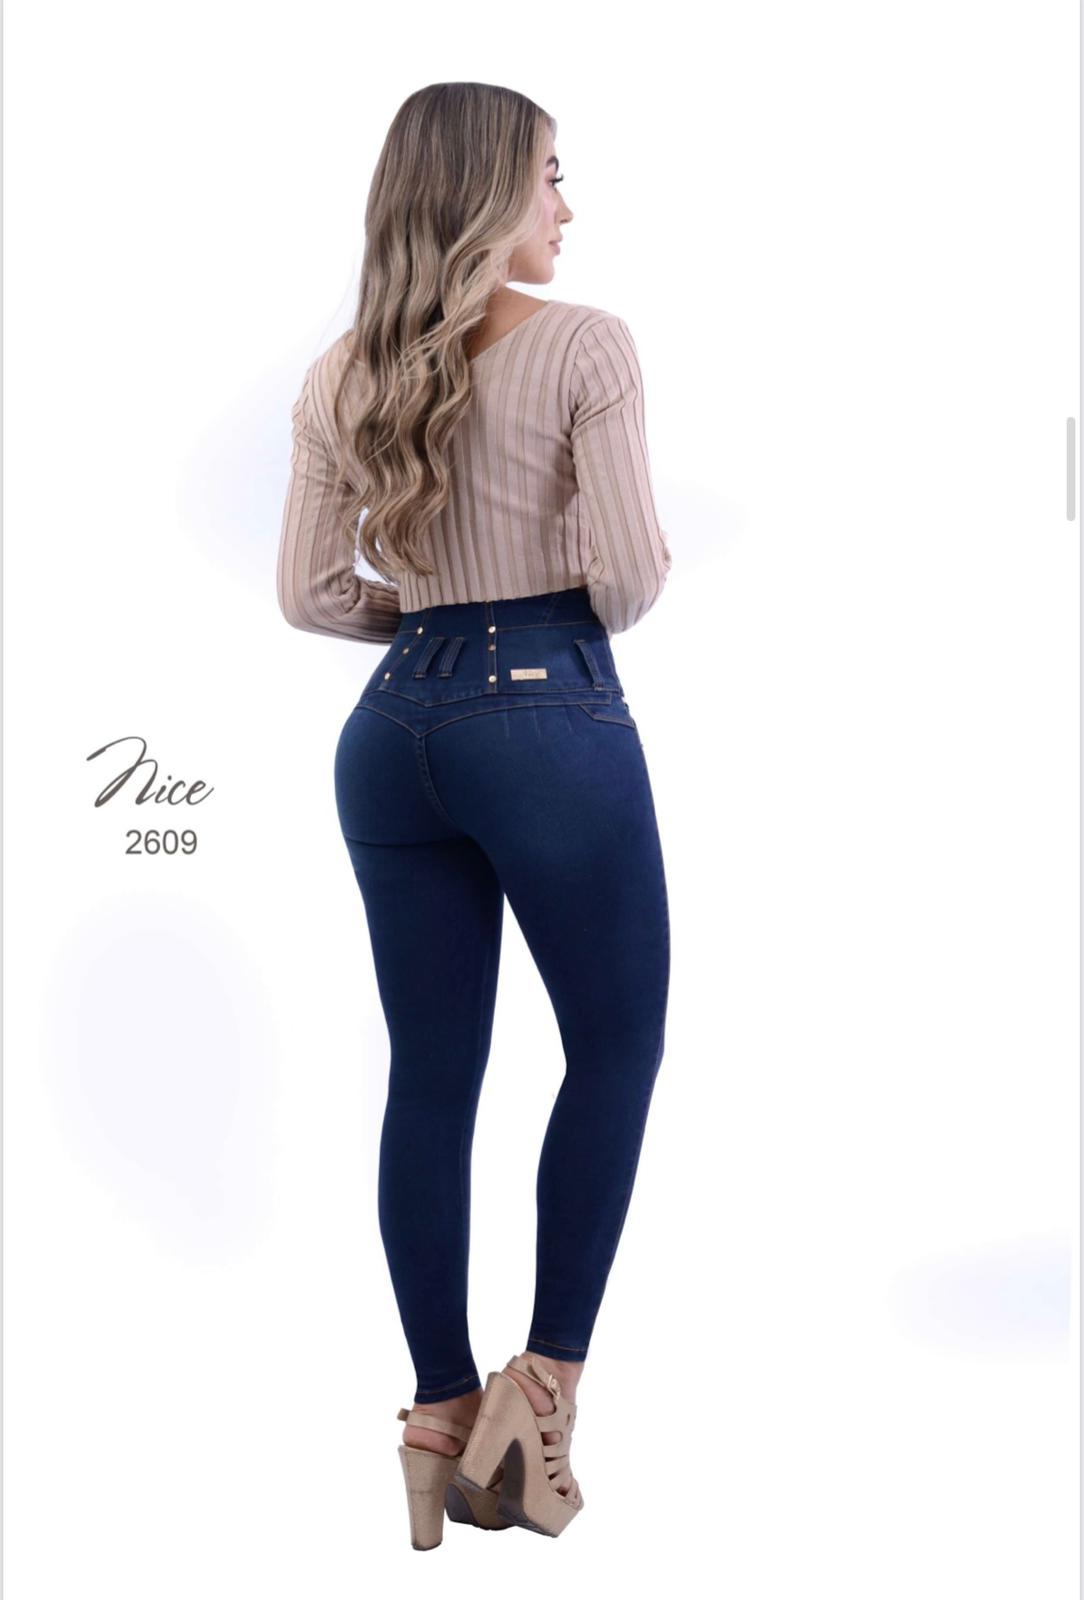 Persephone's Colombian Jeans Levantacola